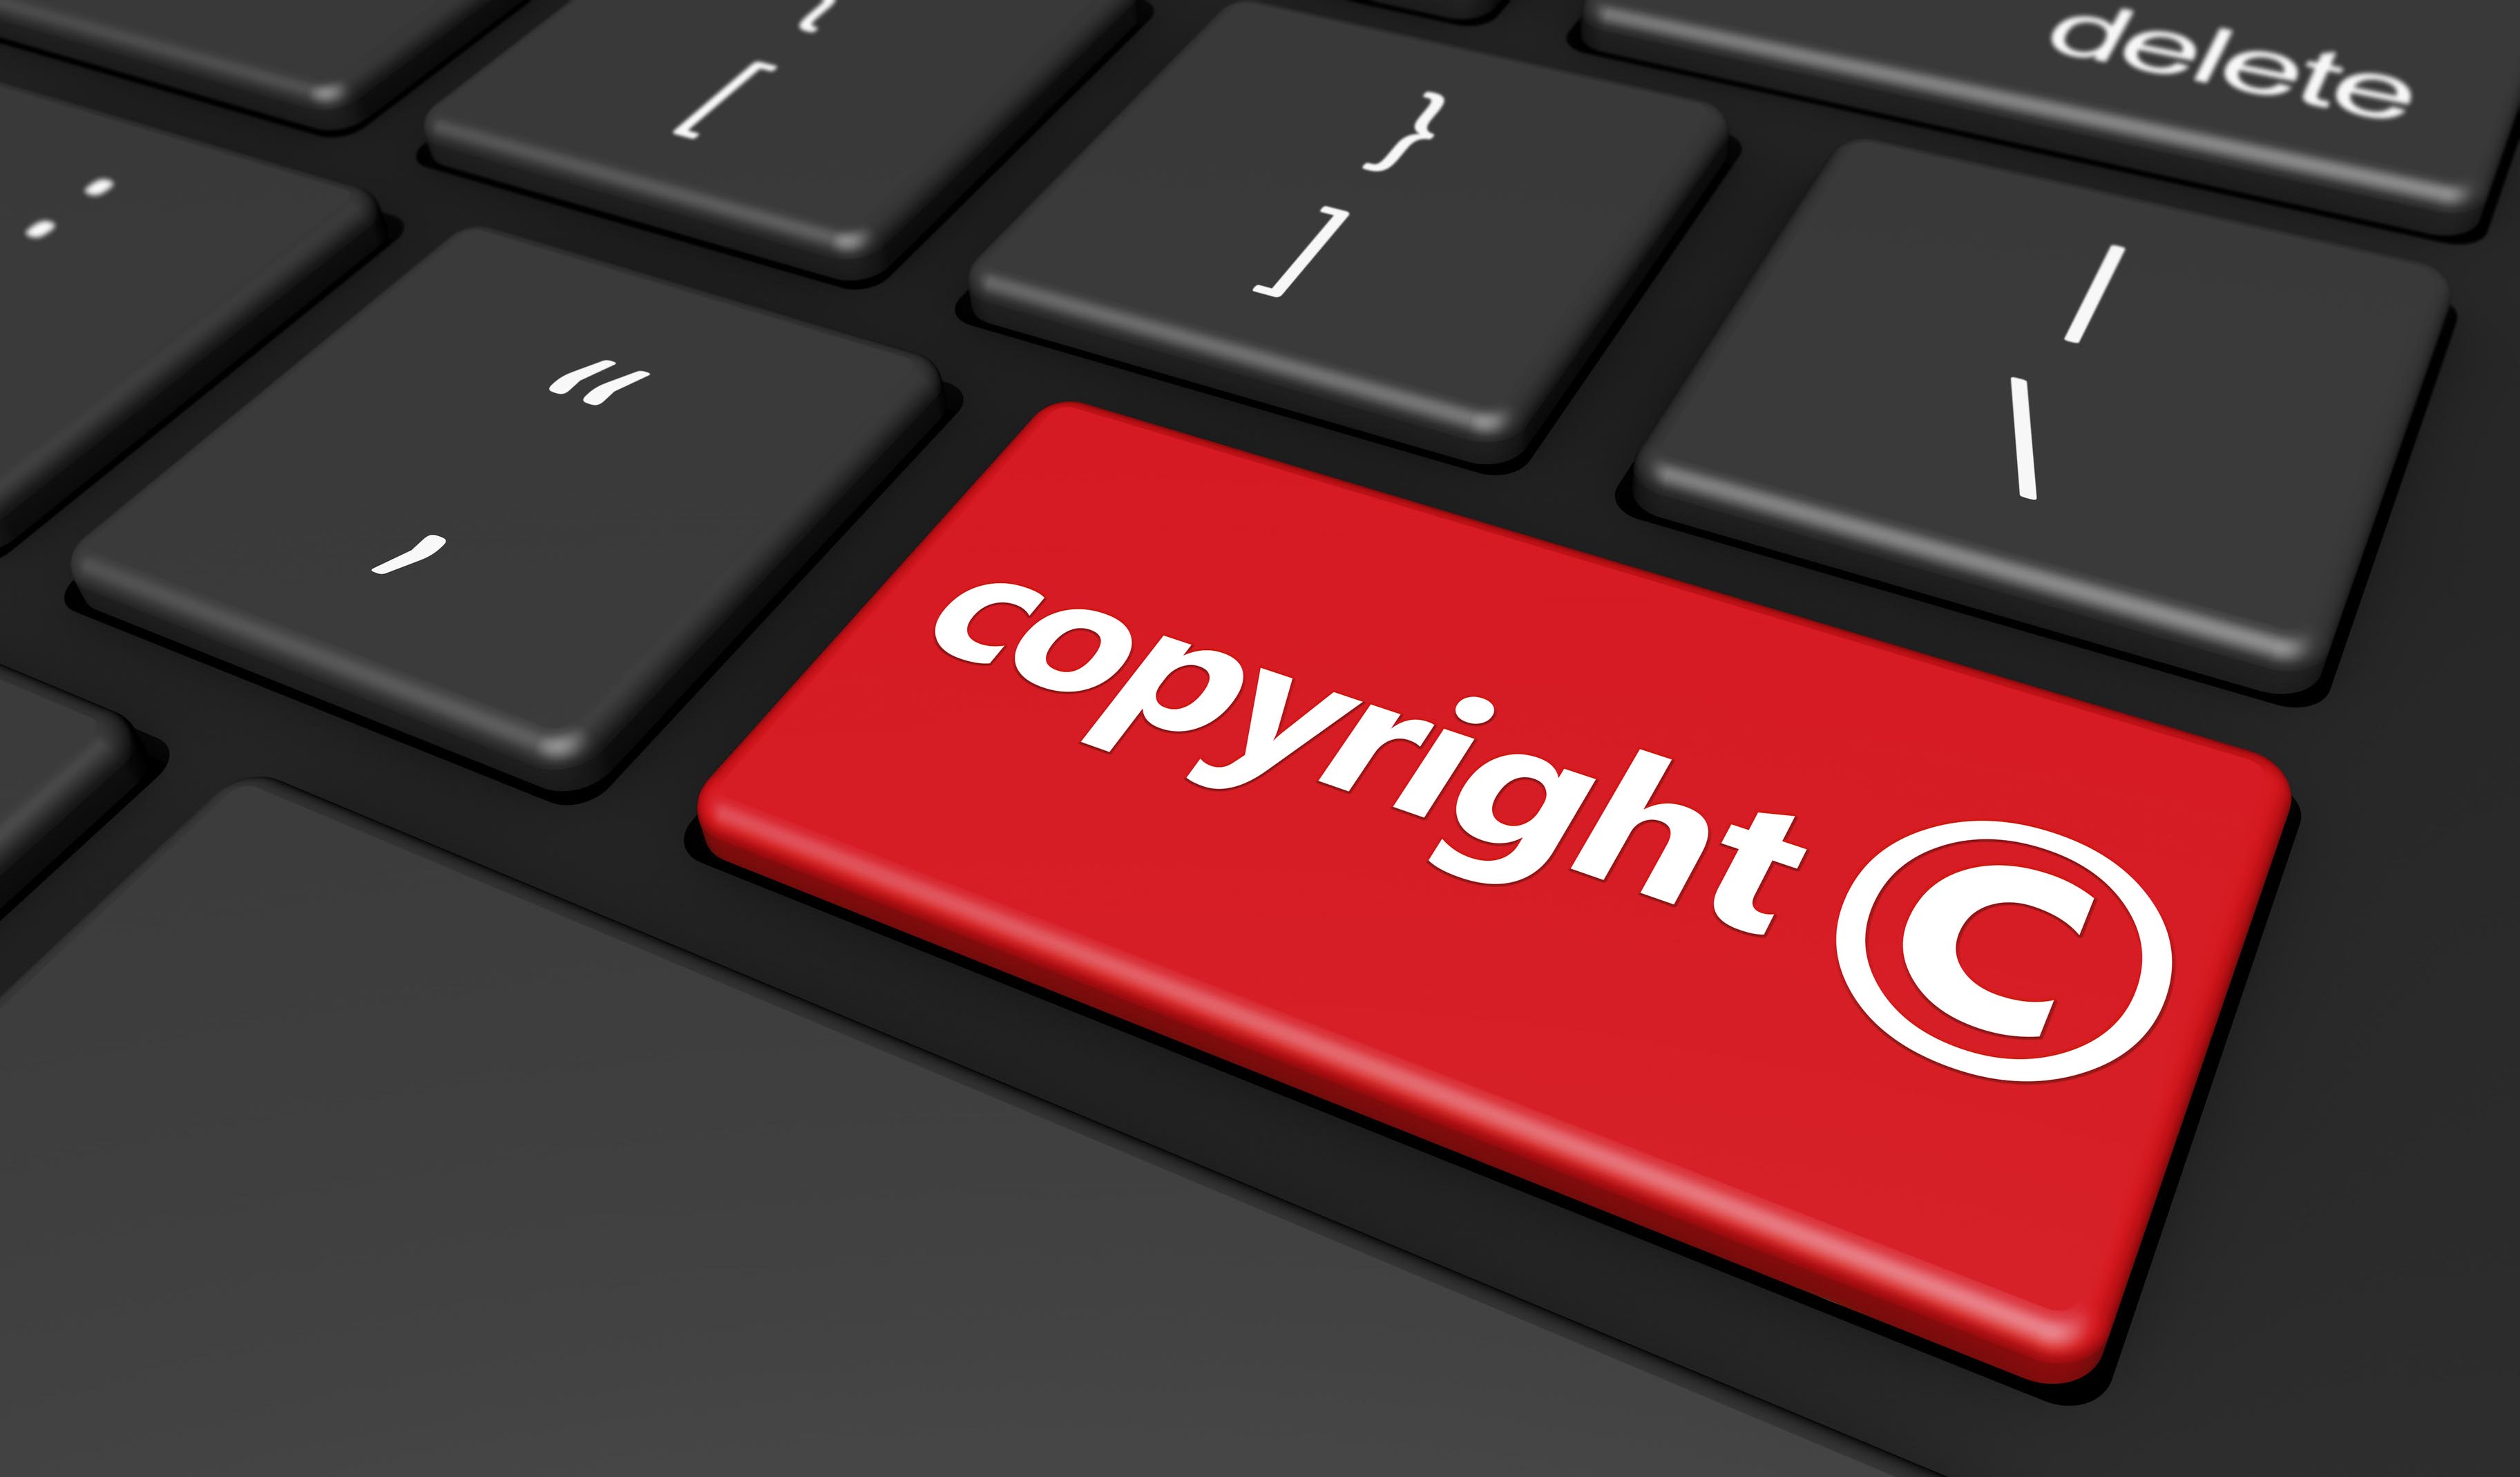 copyright free symbols